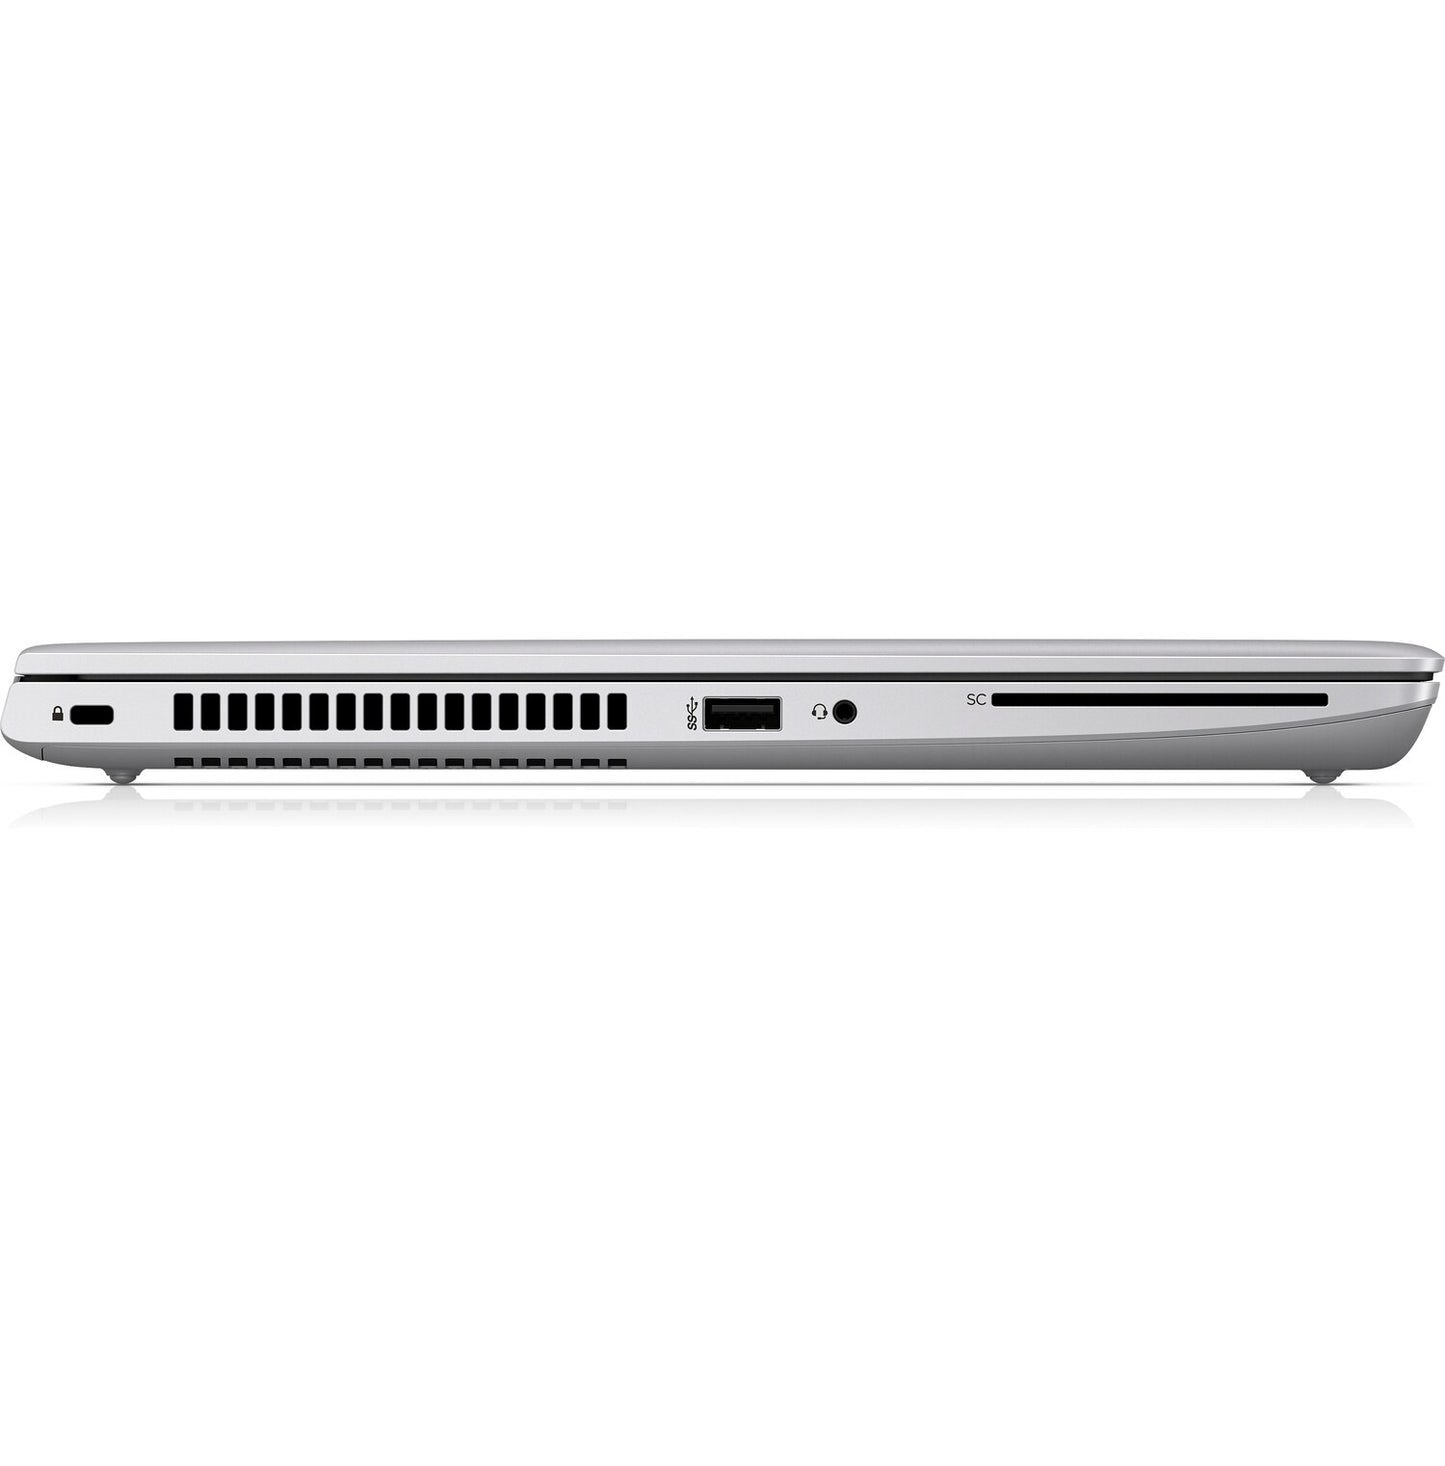 HP ProBook 645 G4 Laptop AMD Ryzen R3 Pro 2300U 8GB Ram 500 GB HDD 14" NoWebCam